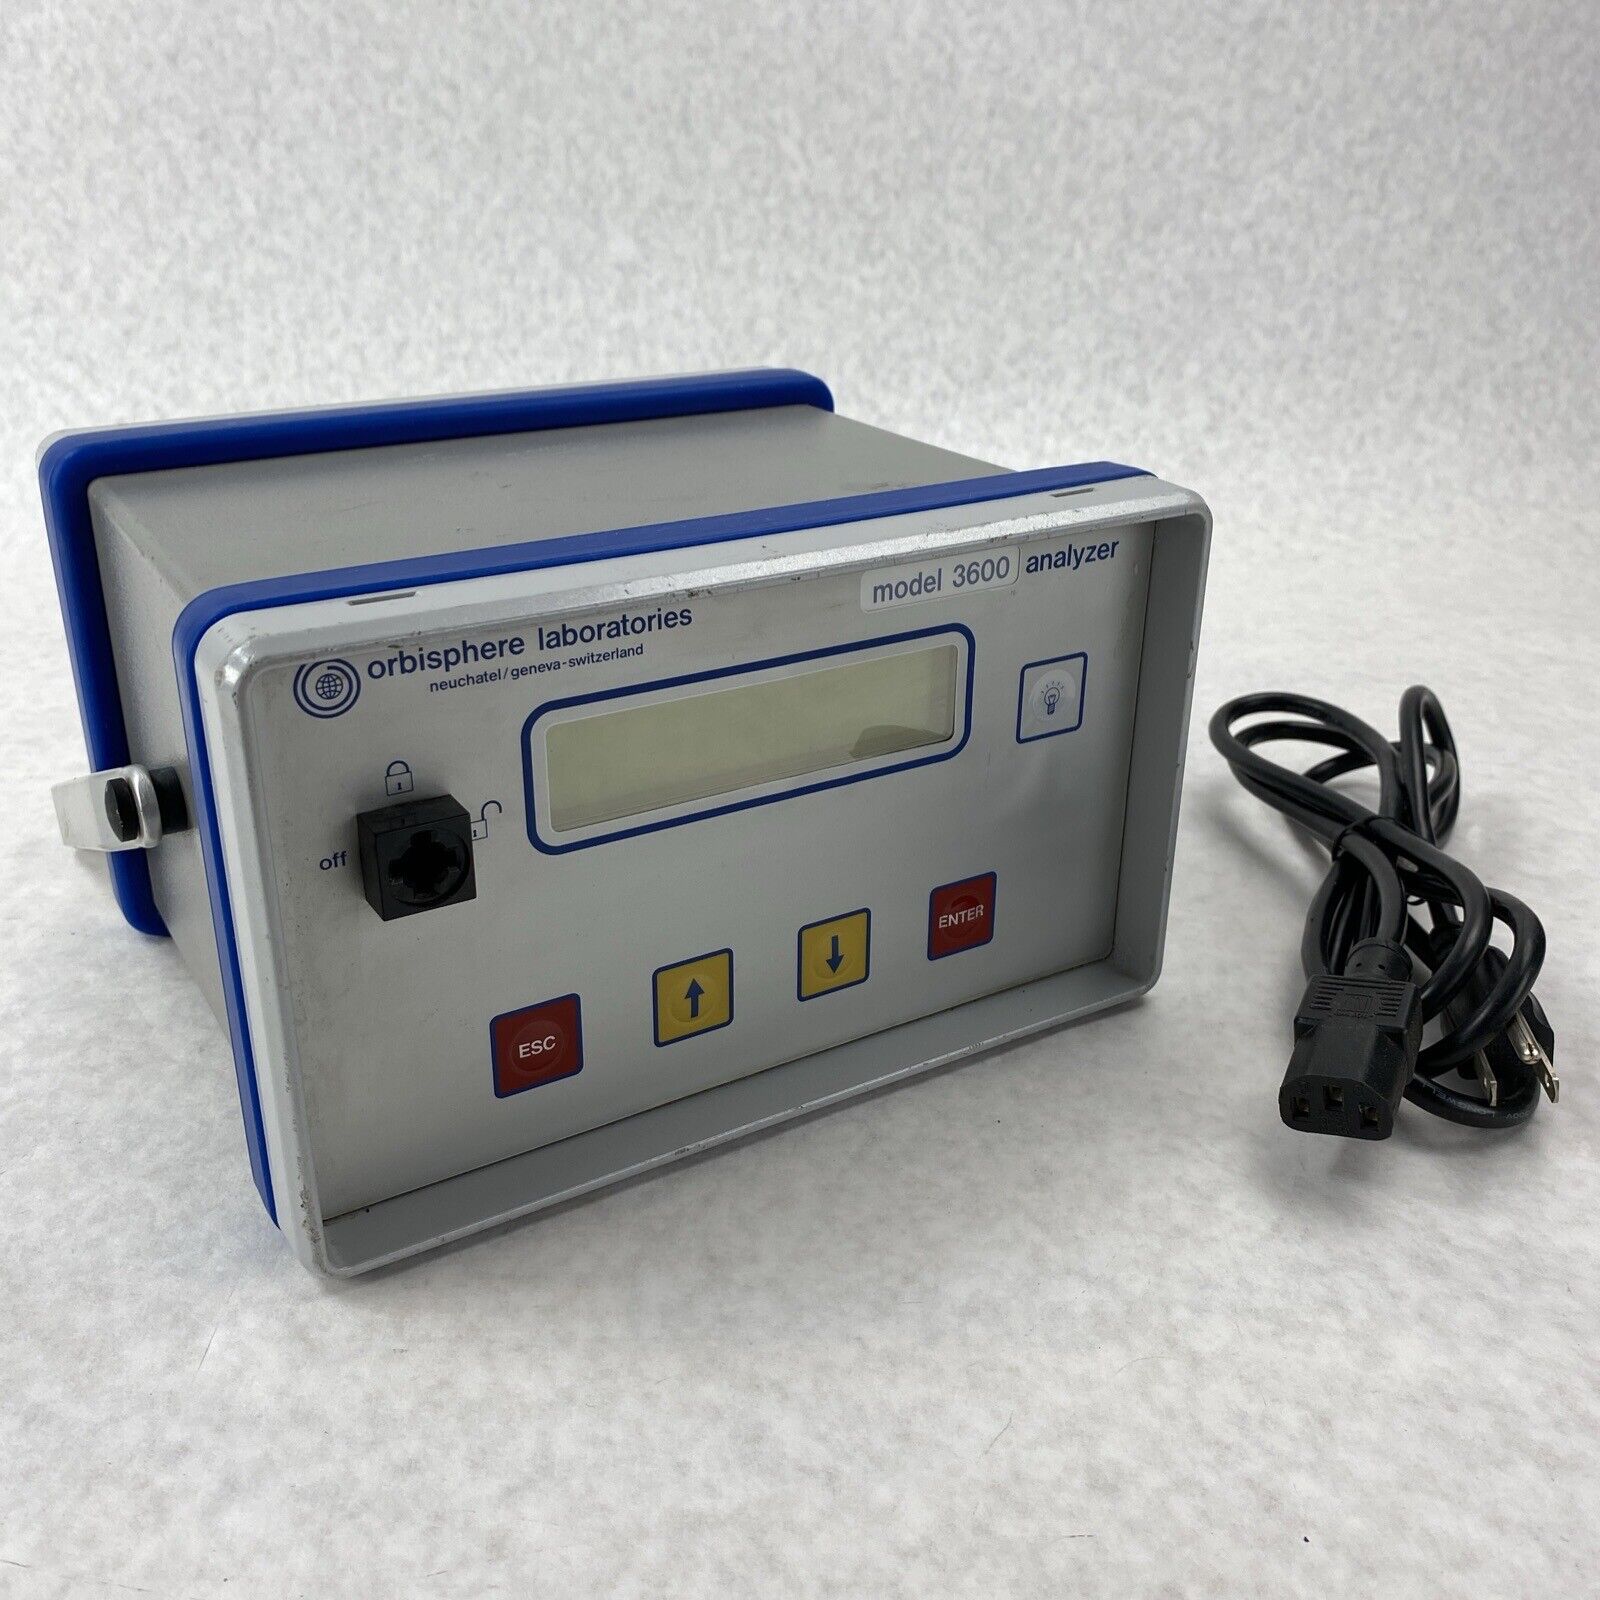 Orbisphere Laboratories Model 3600 Analyzer w/ Power Adapter